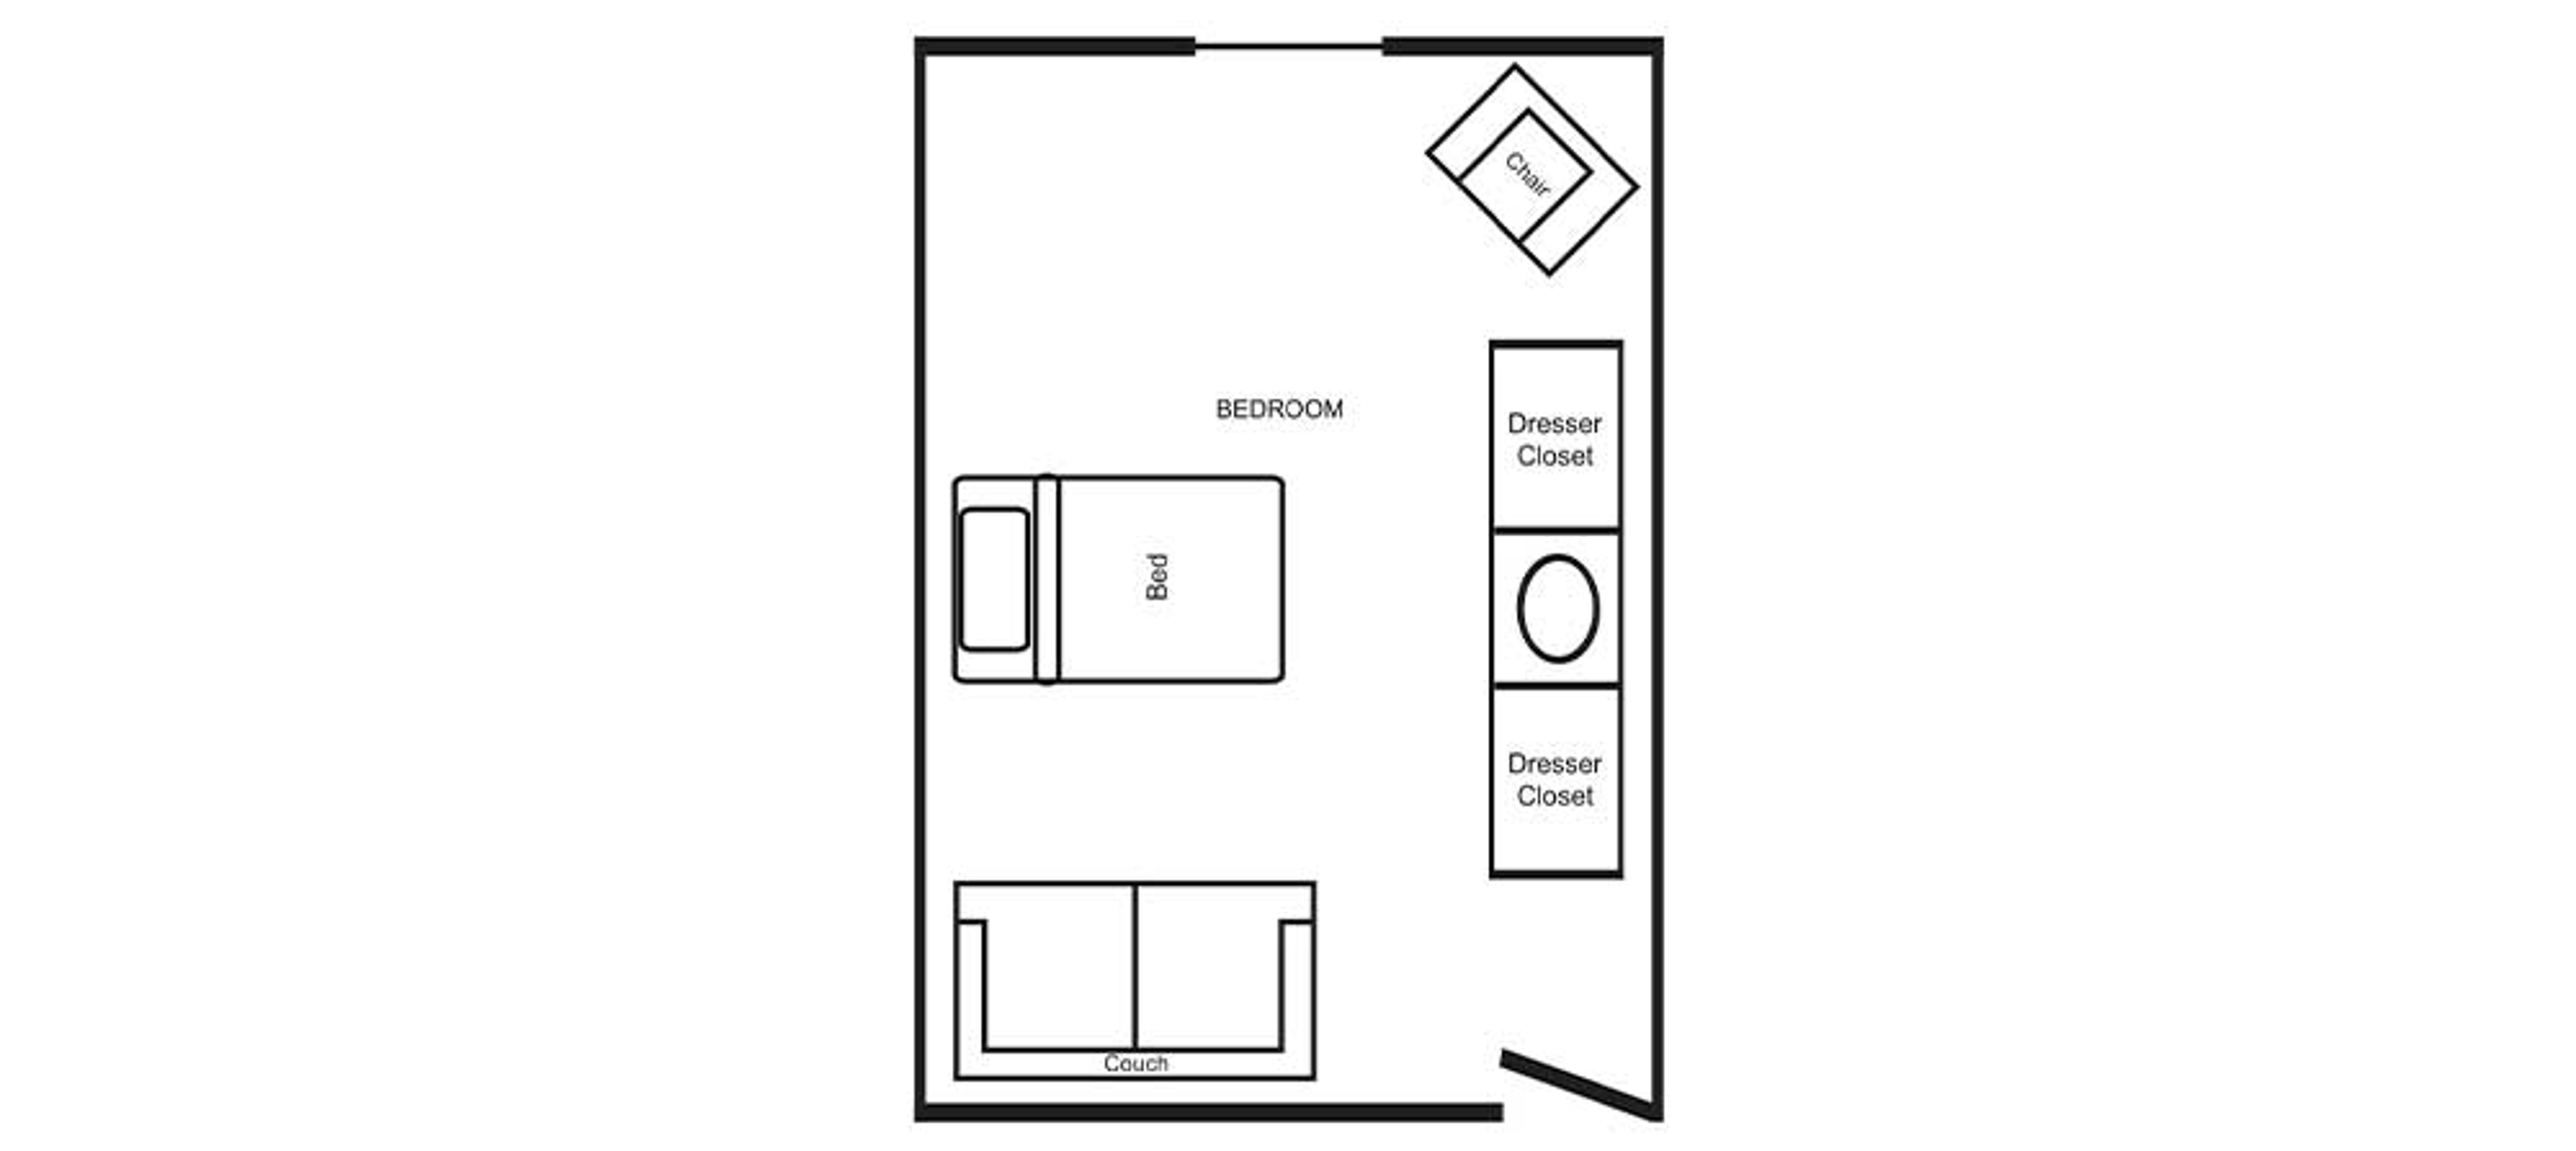 Floorplan - Homeplace at Burlington - Shared Studio